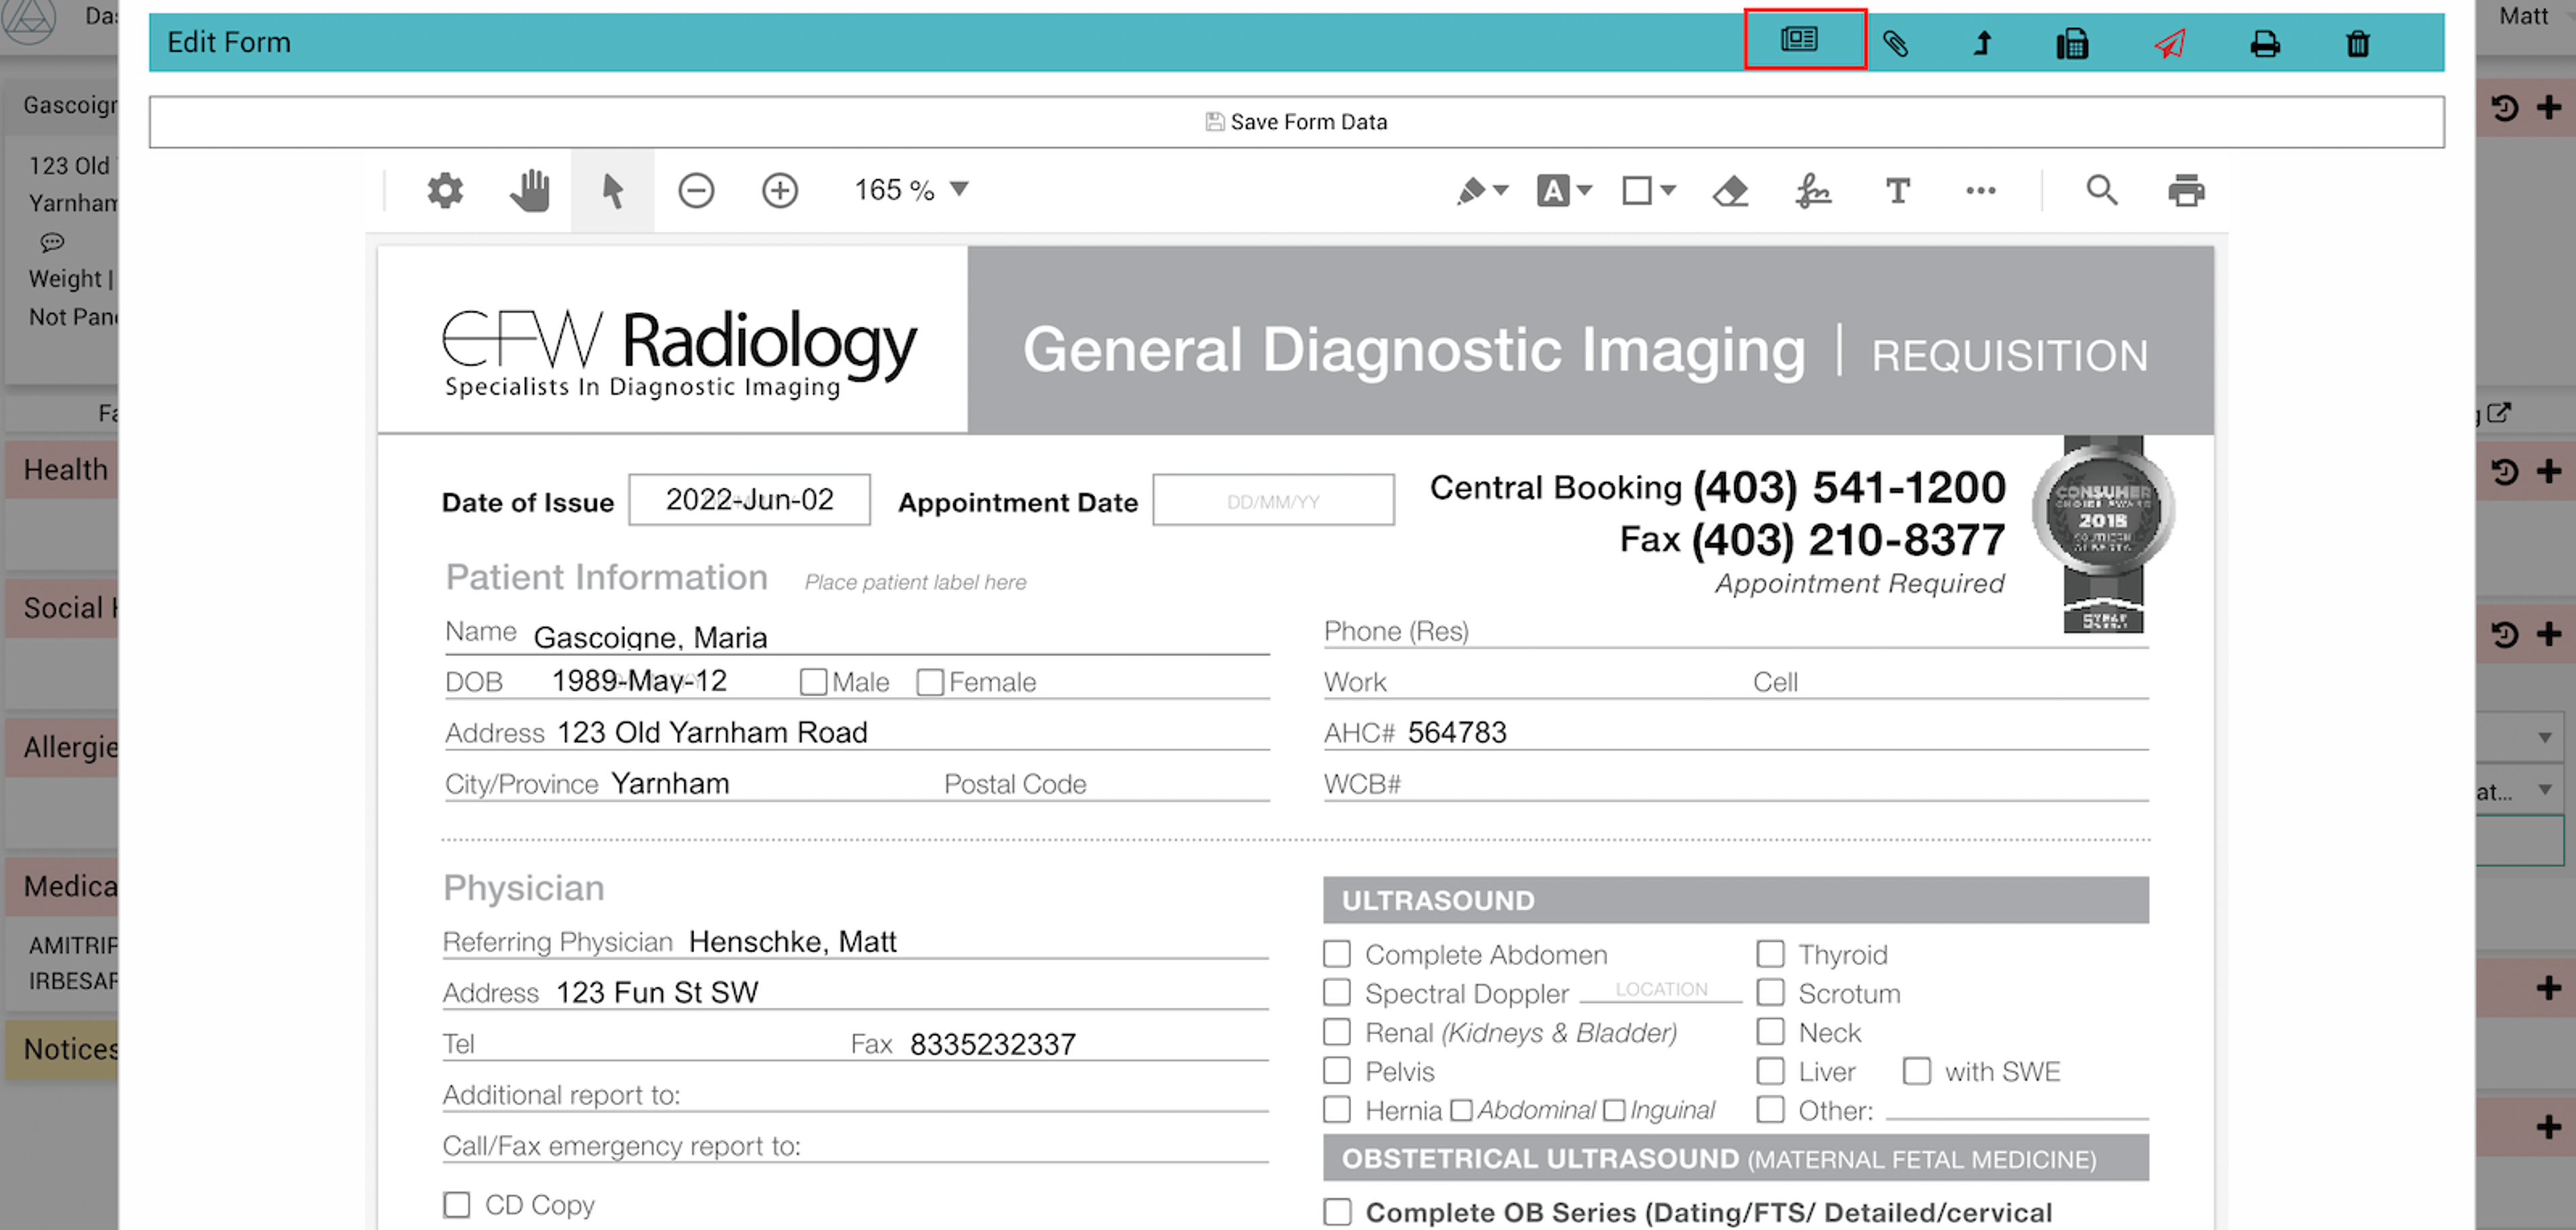 EFW Radiology online requisition form screenshot